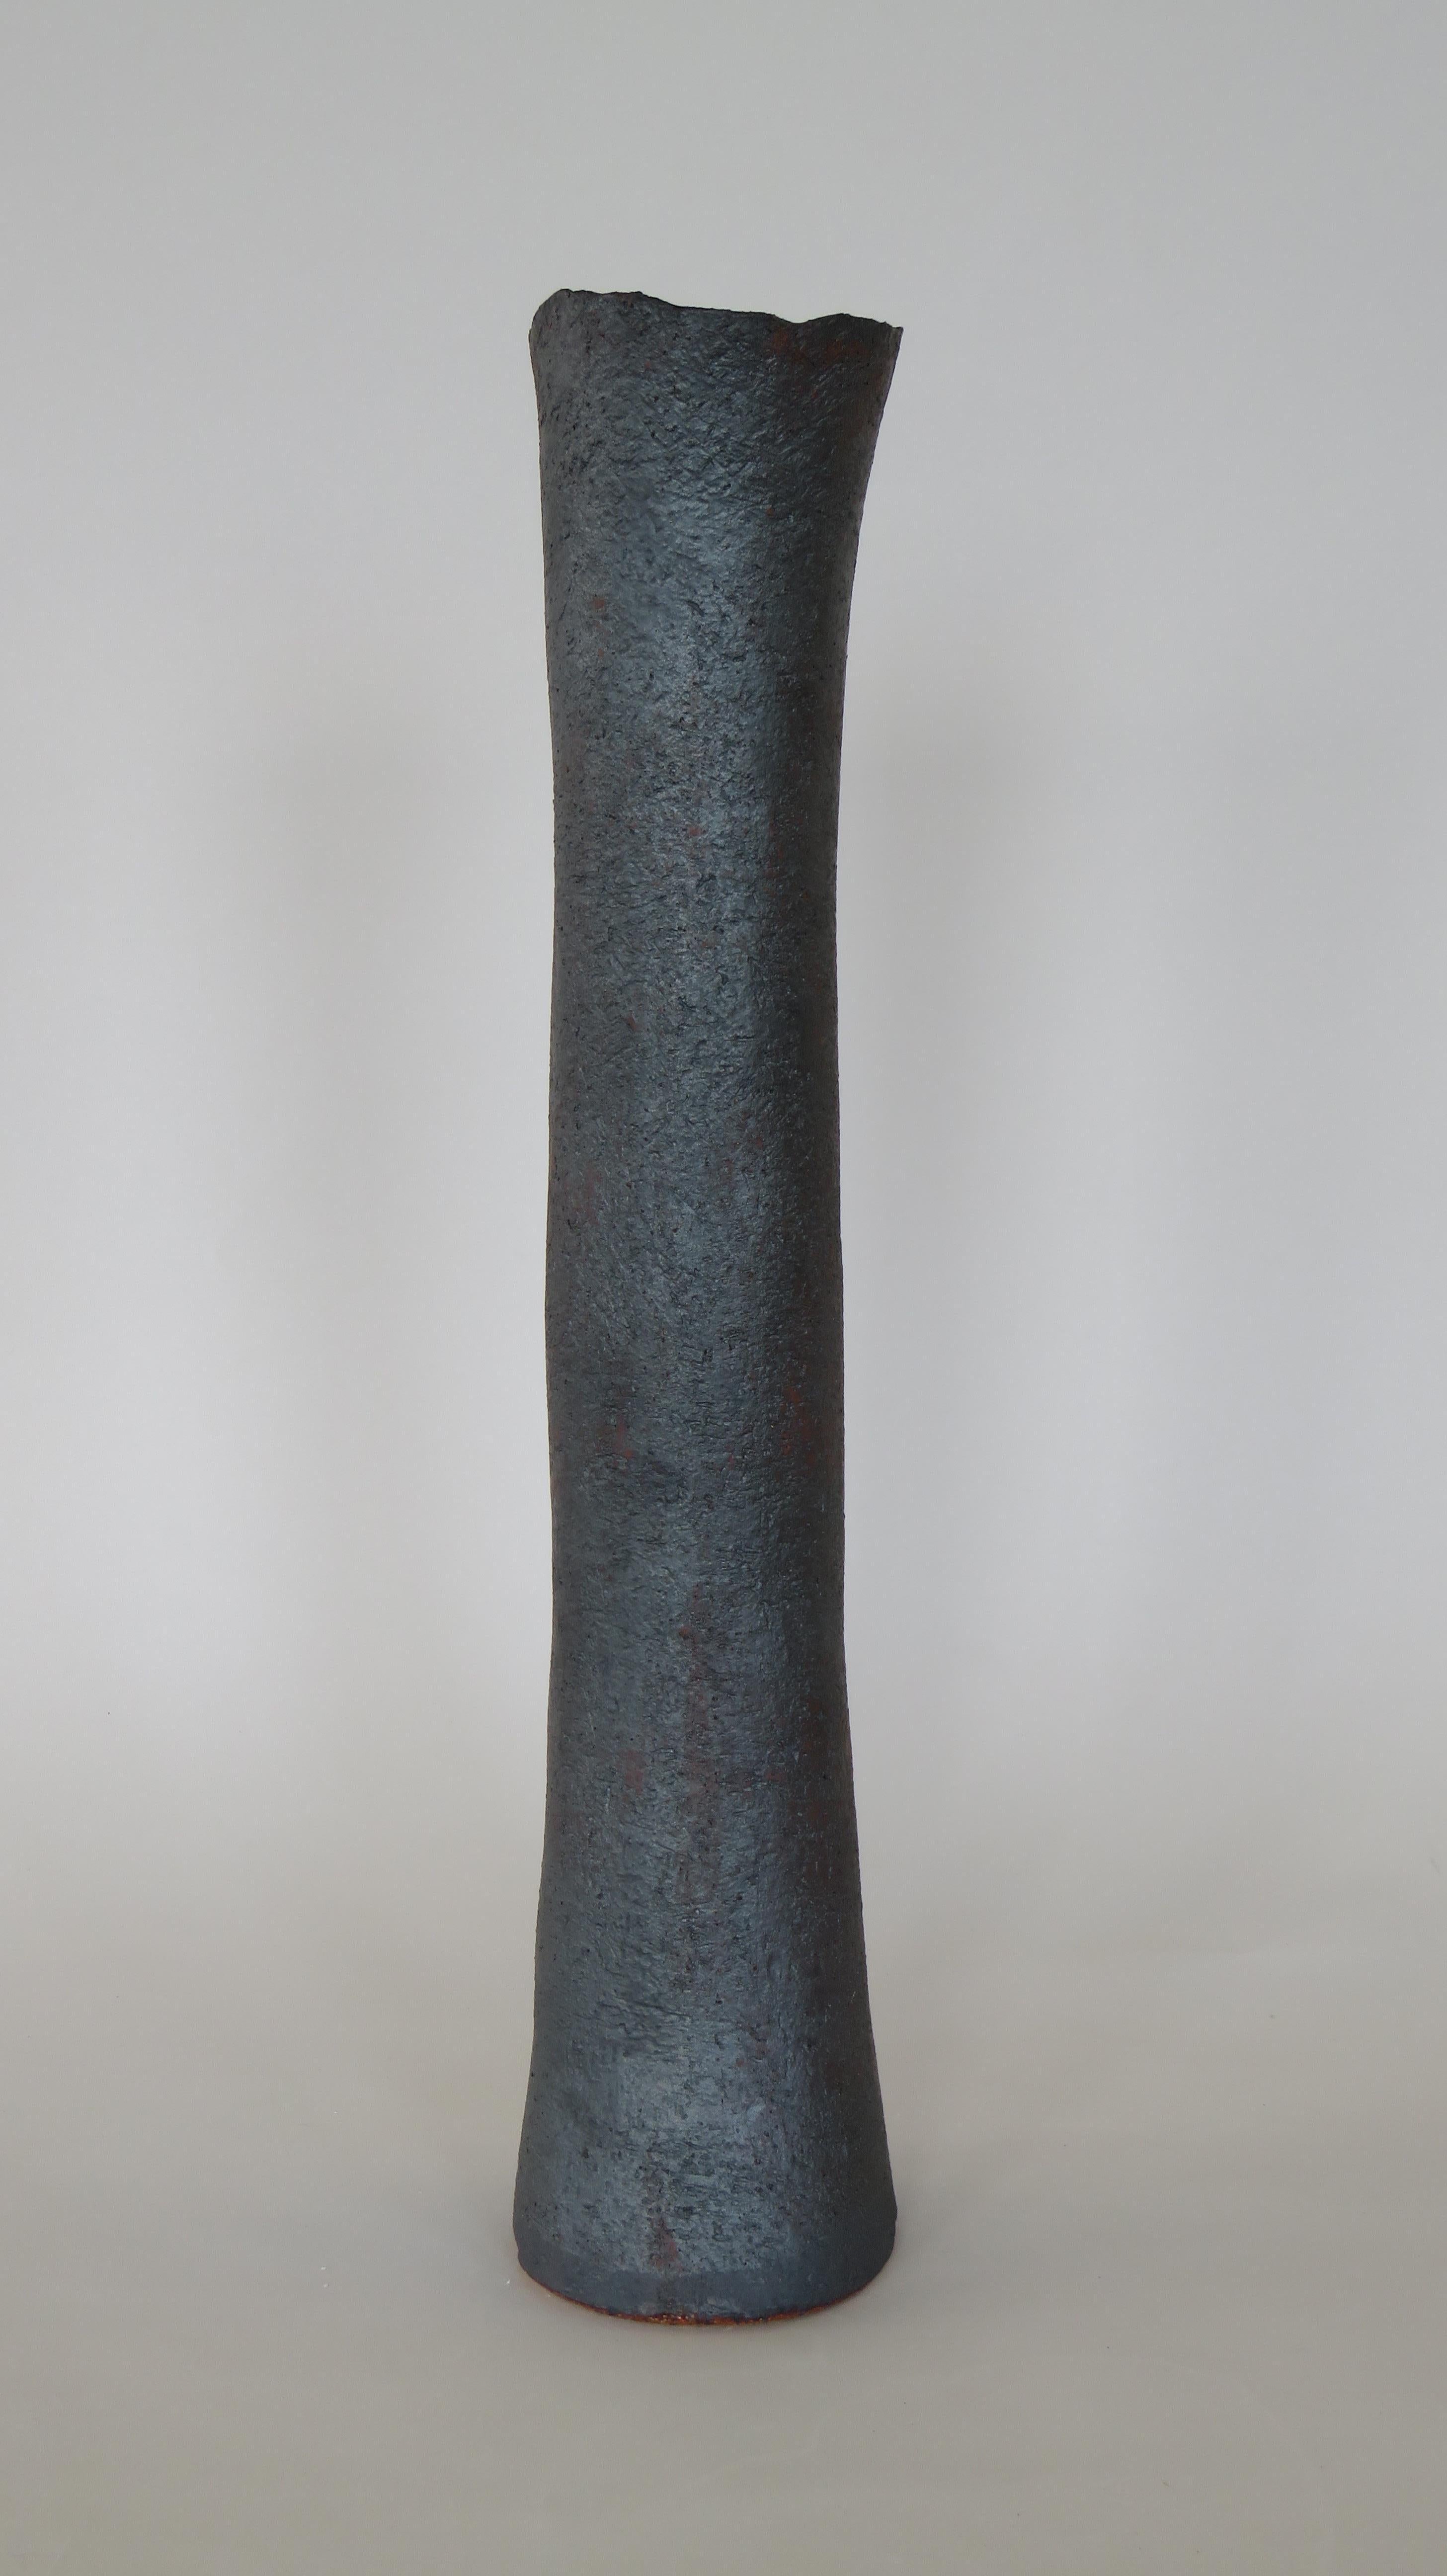 Ceramic Tall, Tubular Metallic Black Stoneware Vase, 18 3/8 Inches High, Handbuilt